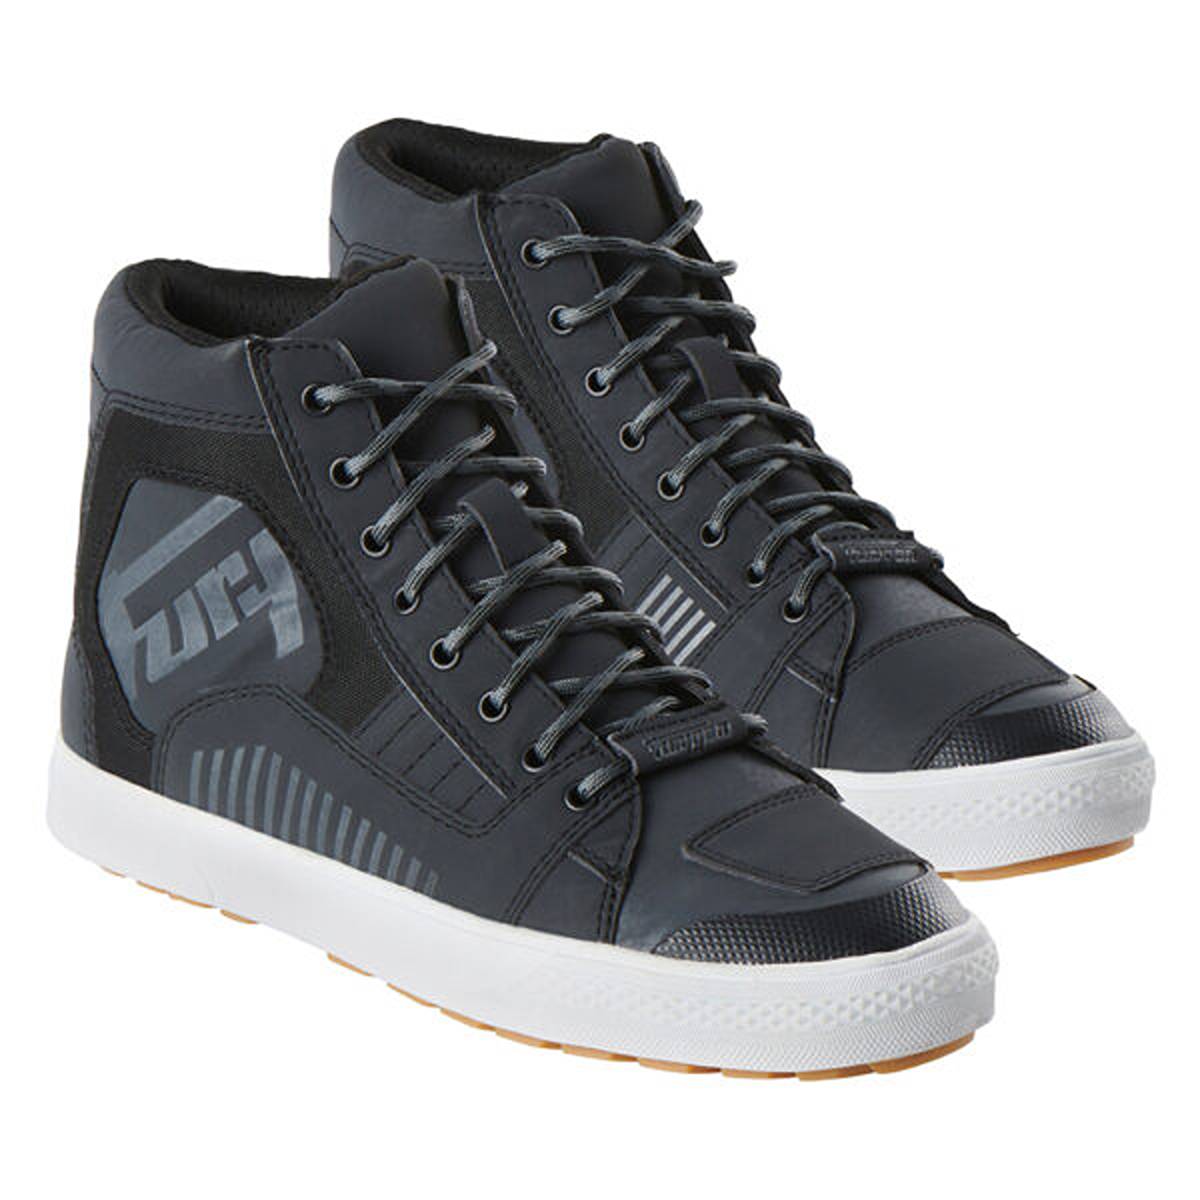 Image of Furygan Sacramento D30 Shoes Black Size 43 ID 3435980368289